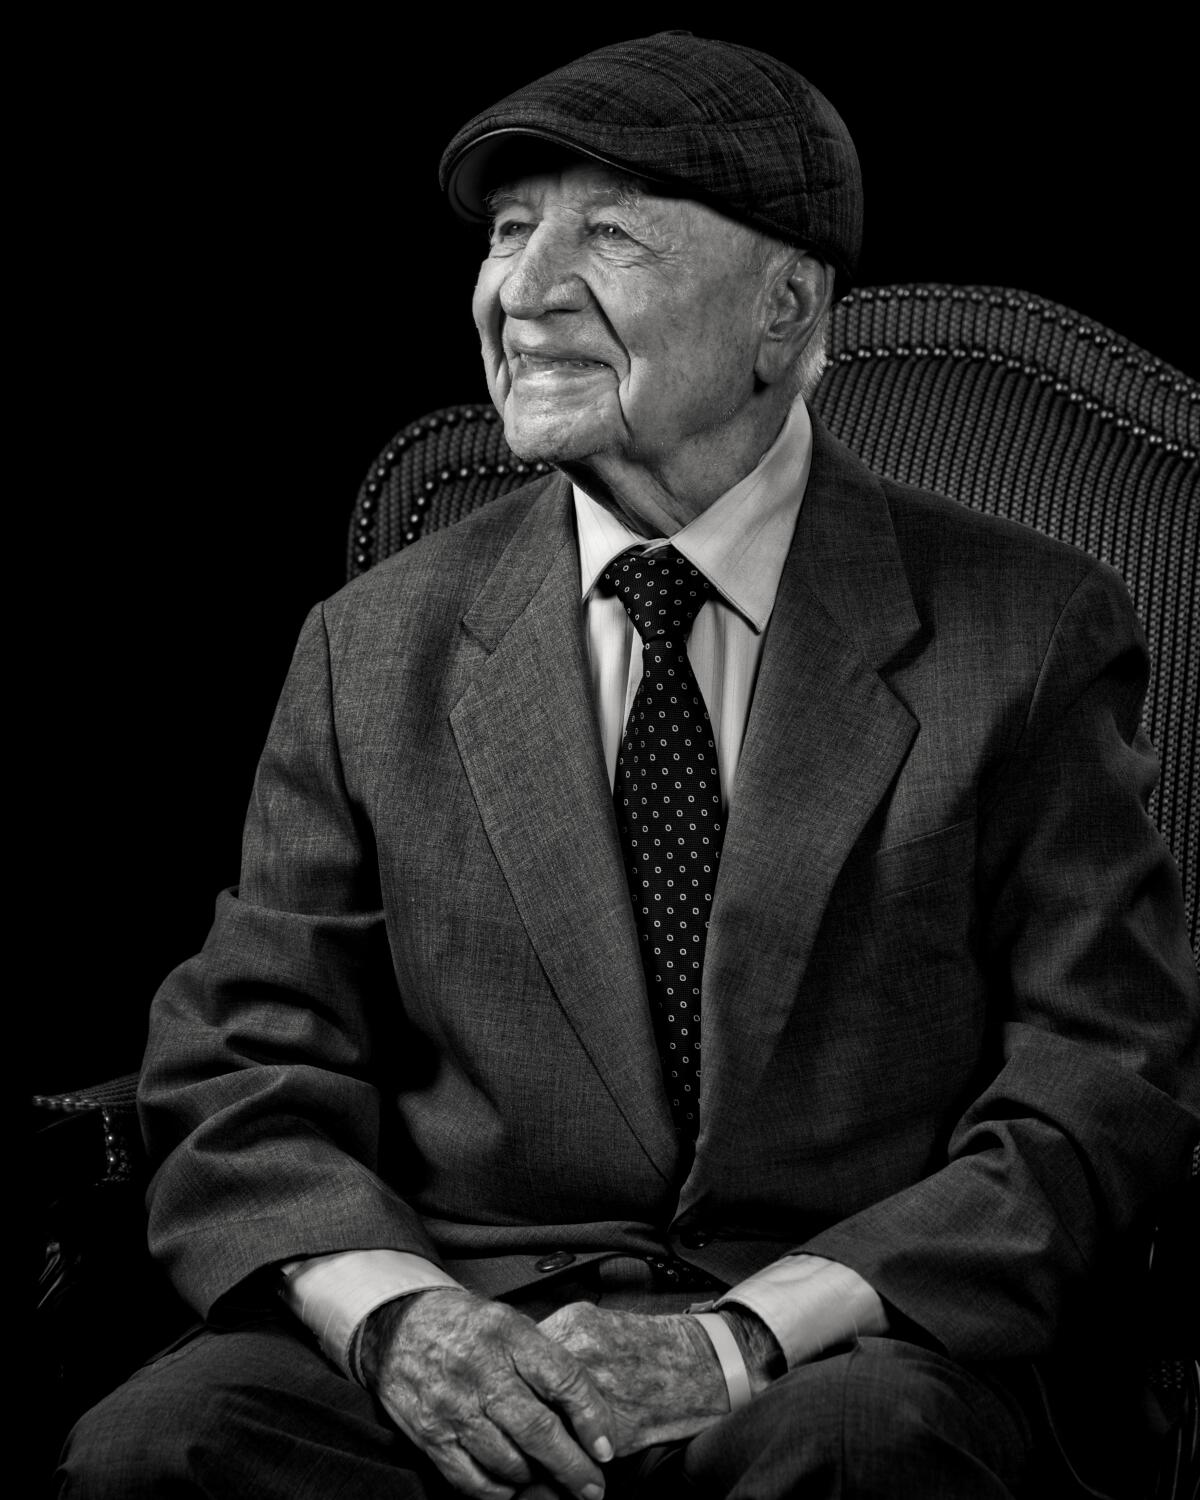 A photograph of Dr. John West, a World War II veteran, taken by Mickey Strand